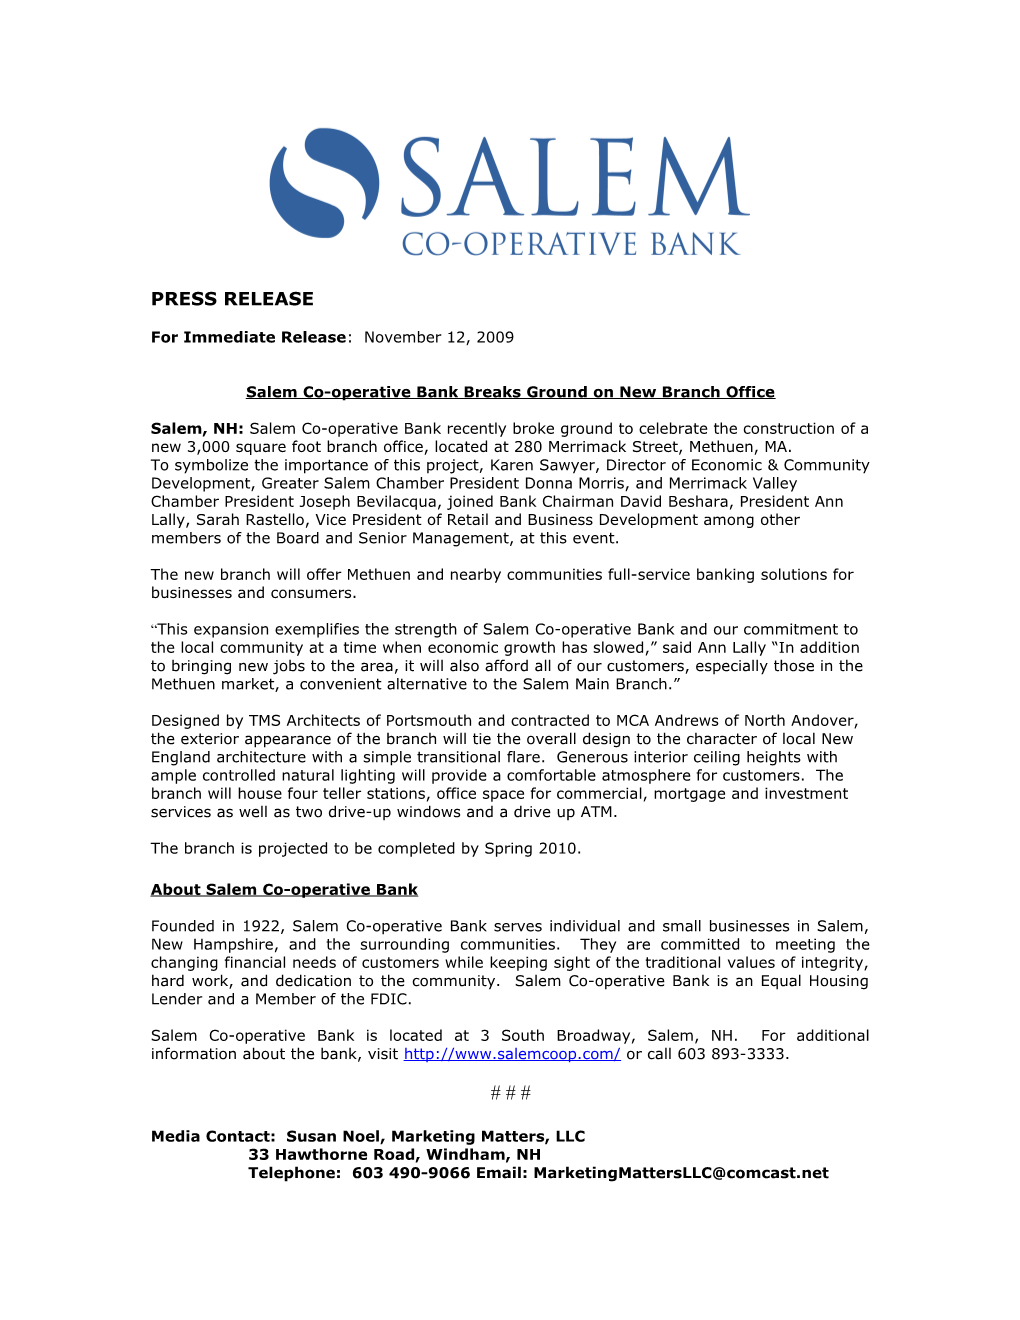 Salem Co-Operative Bank Breaks Ground on New Branch Office